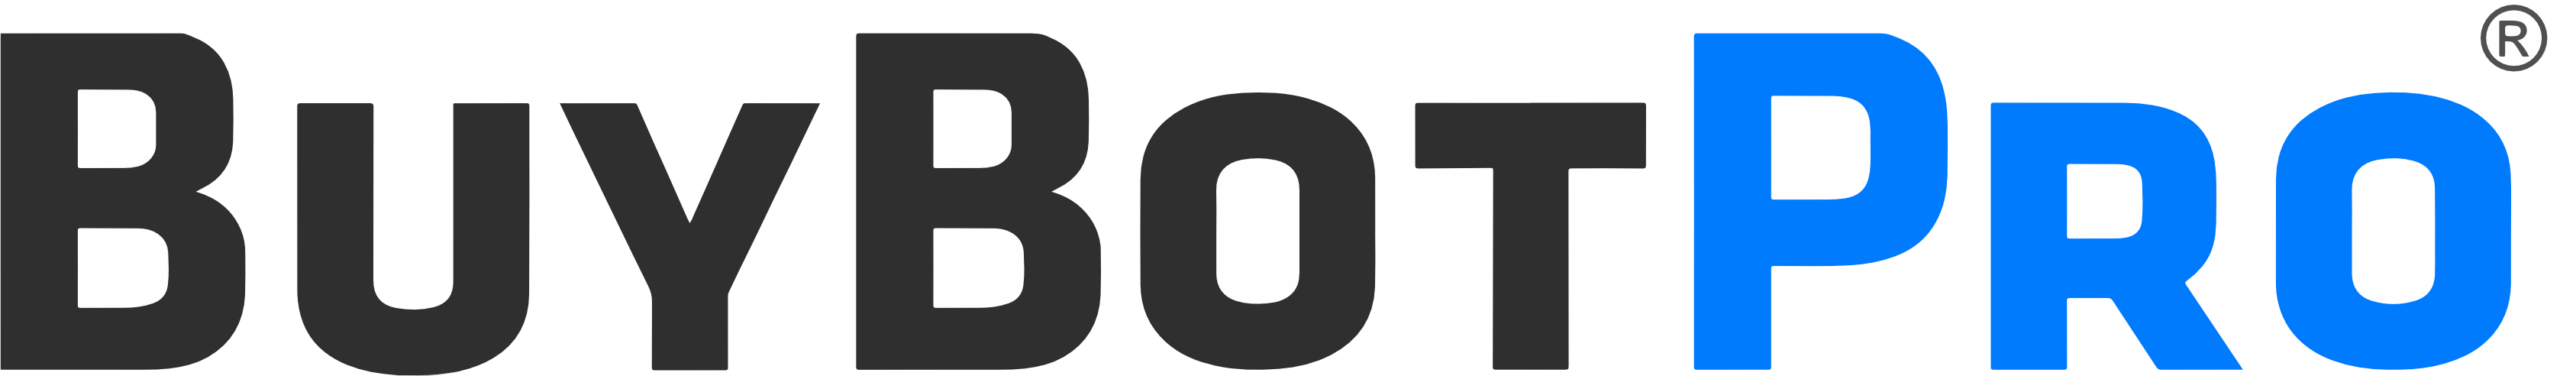 Logo Bot Beli Instan